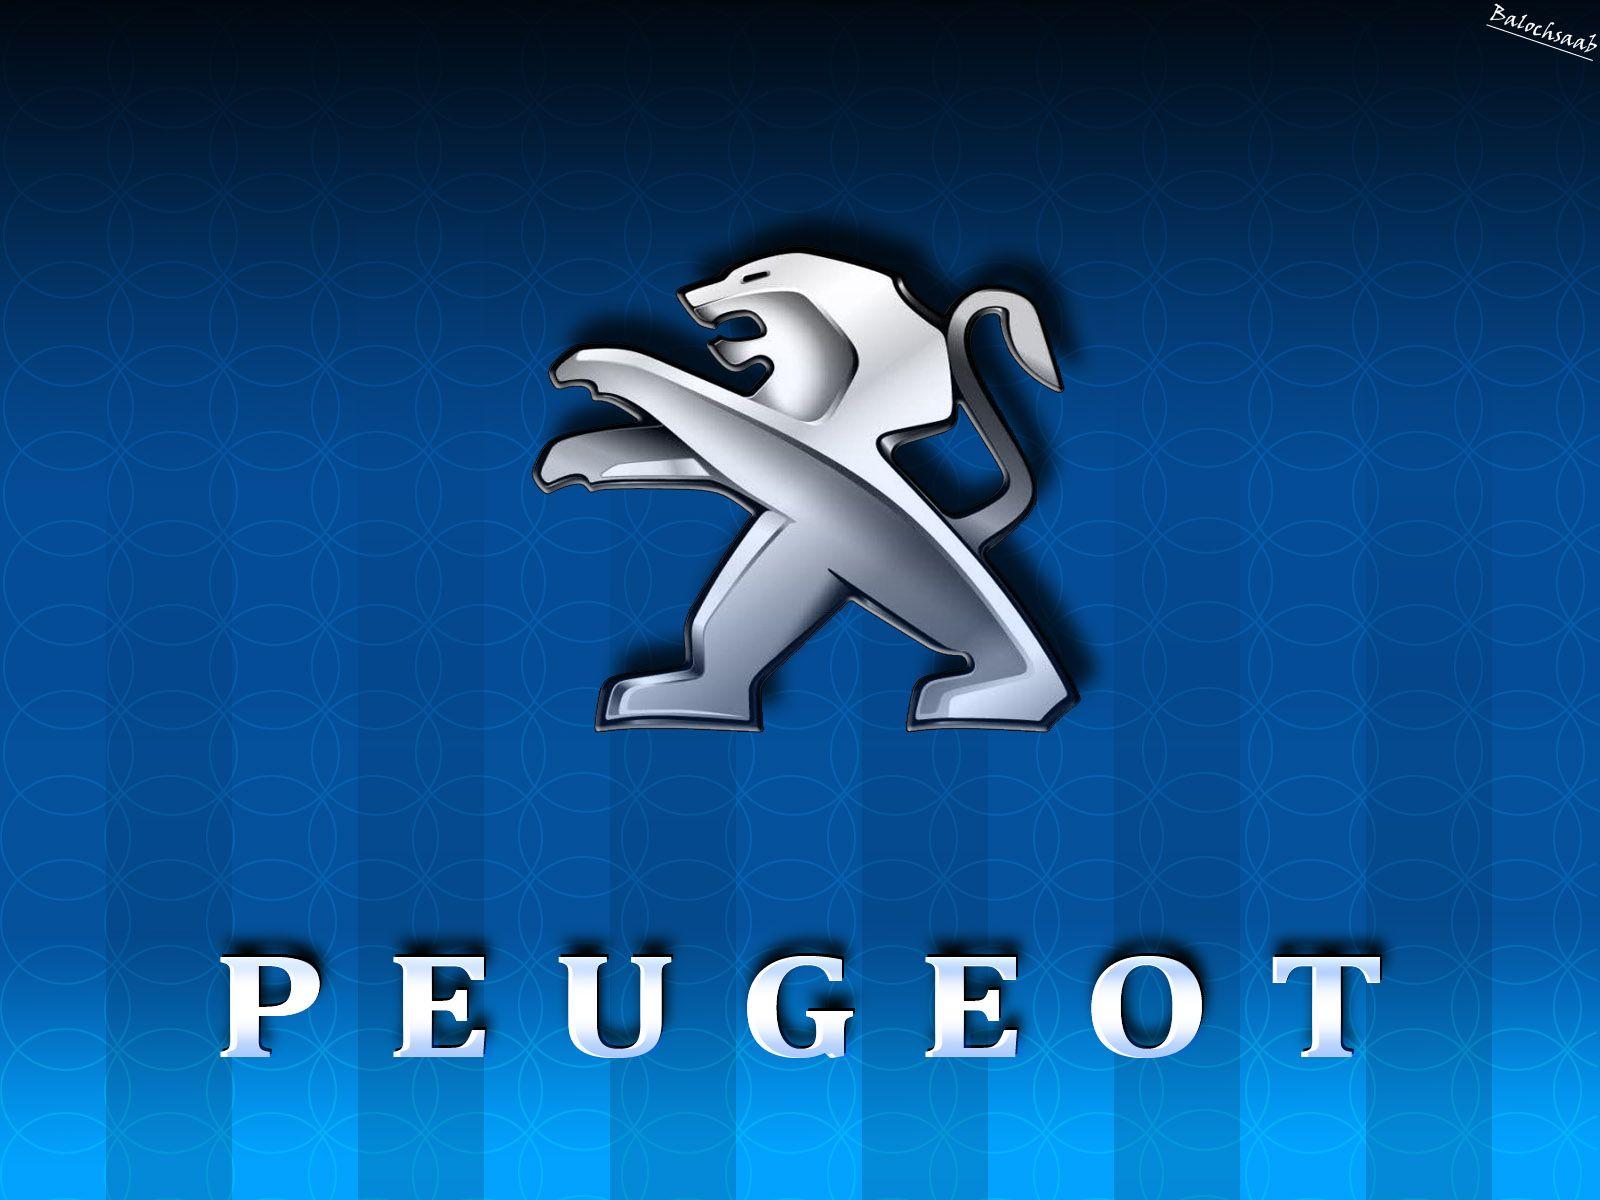 Peugeot Logo. Free Desktop Wallpaper for Widescreen, HD and Mobile